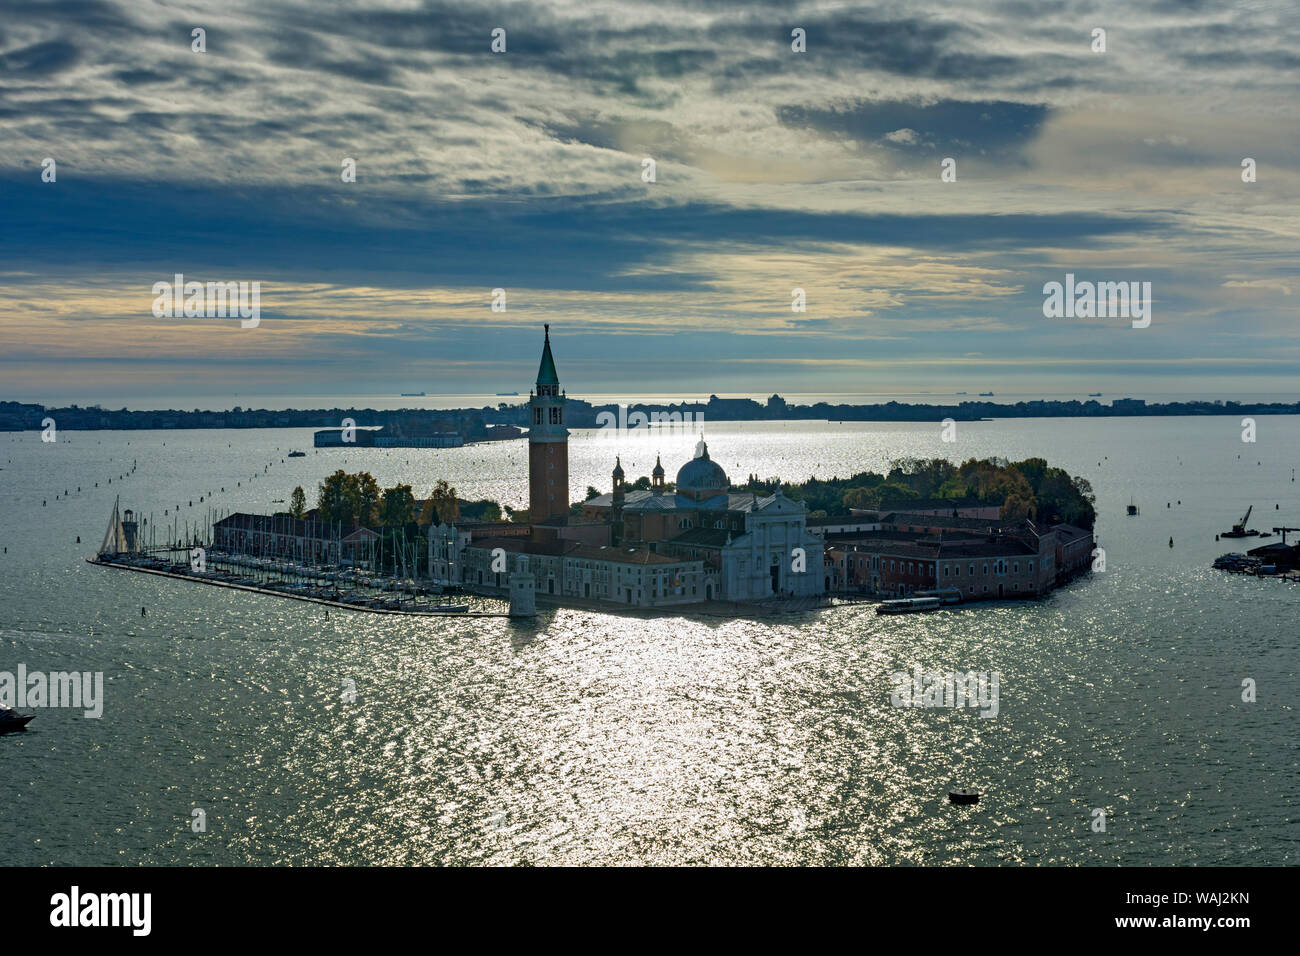 View of the island of San Giorgio Maggiore from the Campanile di San Marco (bell tower), Saint Mark's Square, Venice, Italy Stock Photo